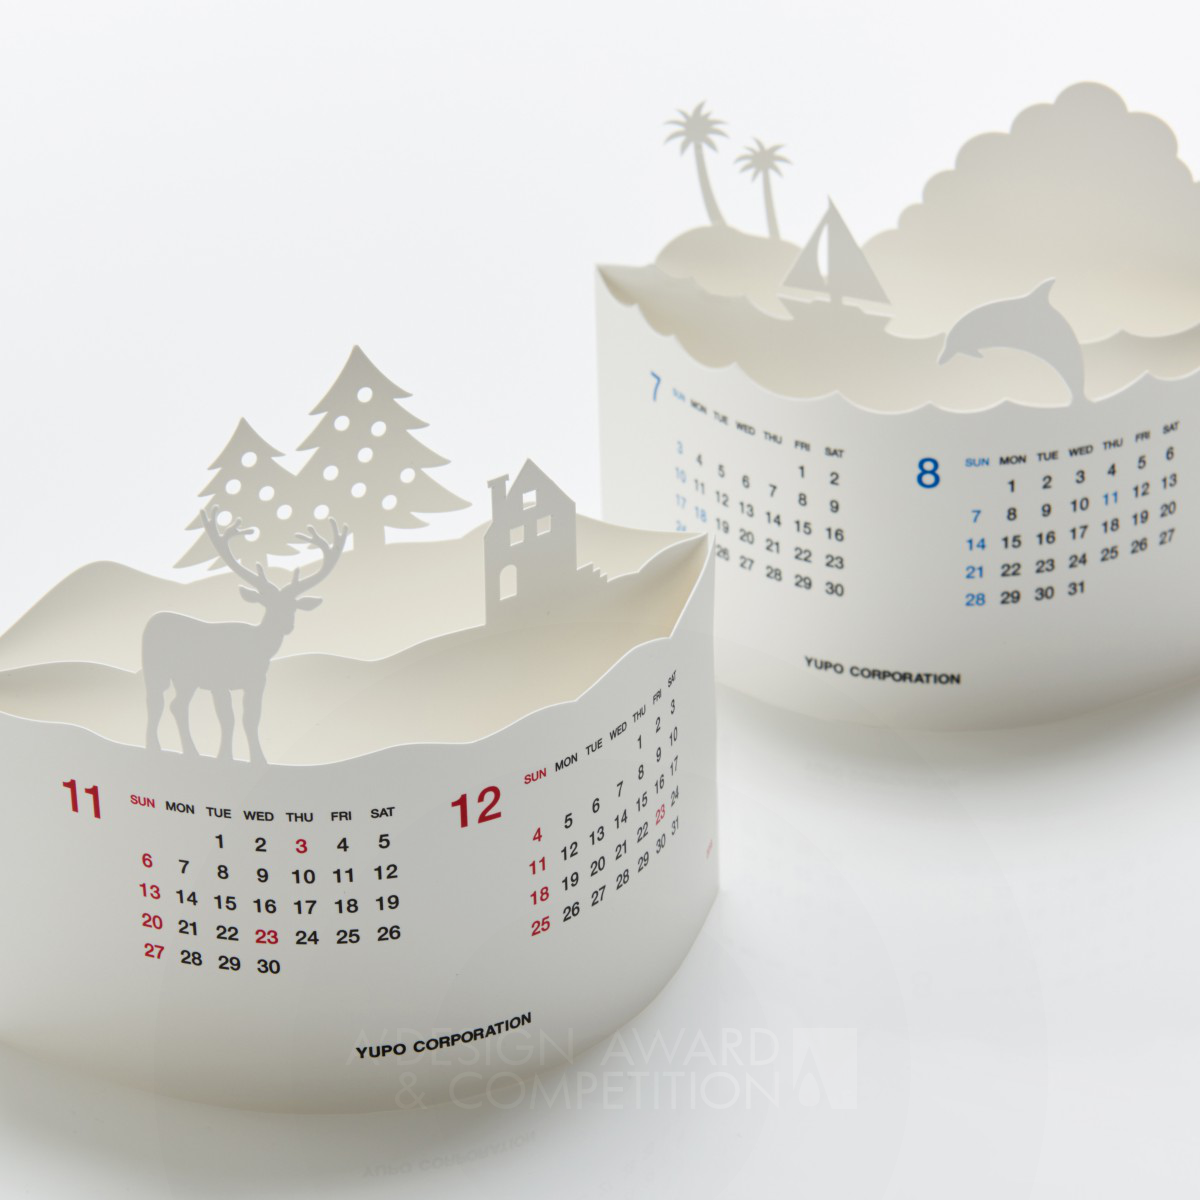 Arc Calendar Calendar by Katsumi Tamura